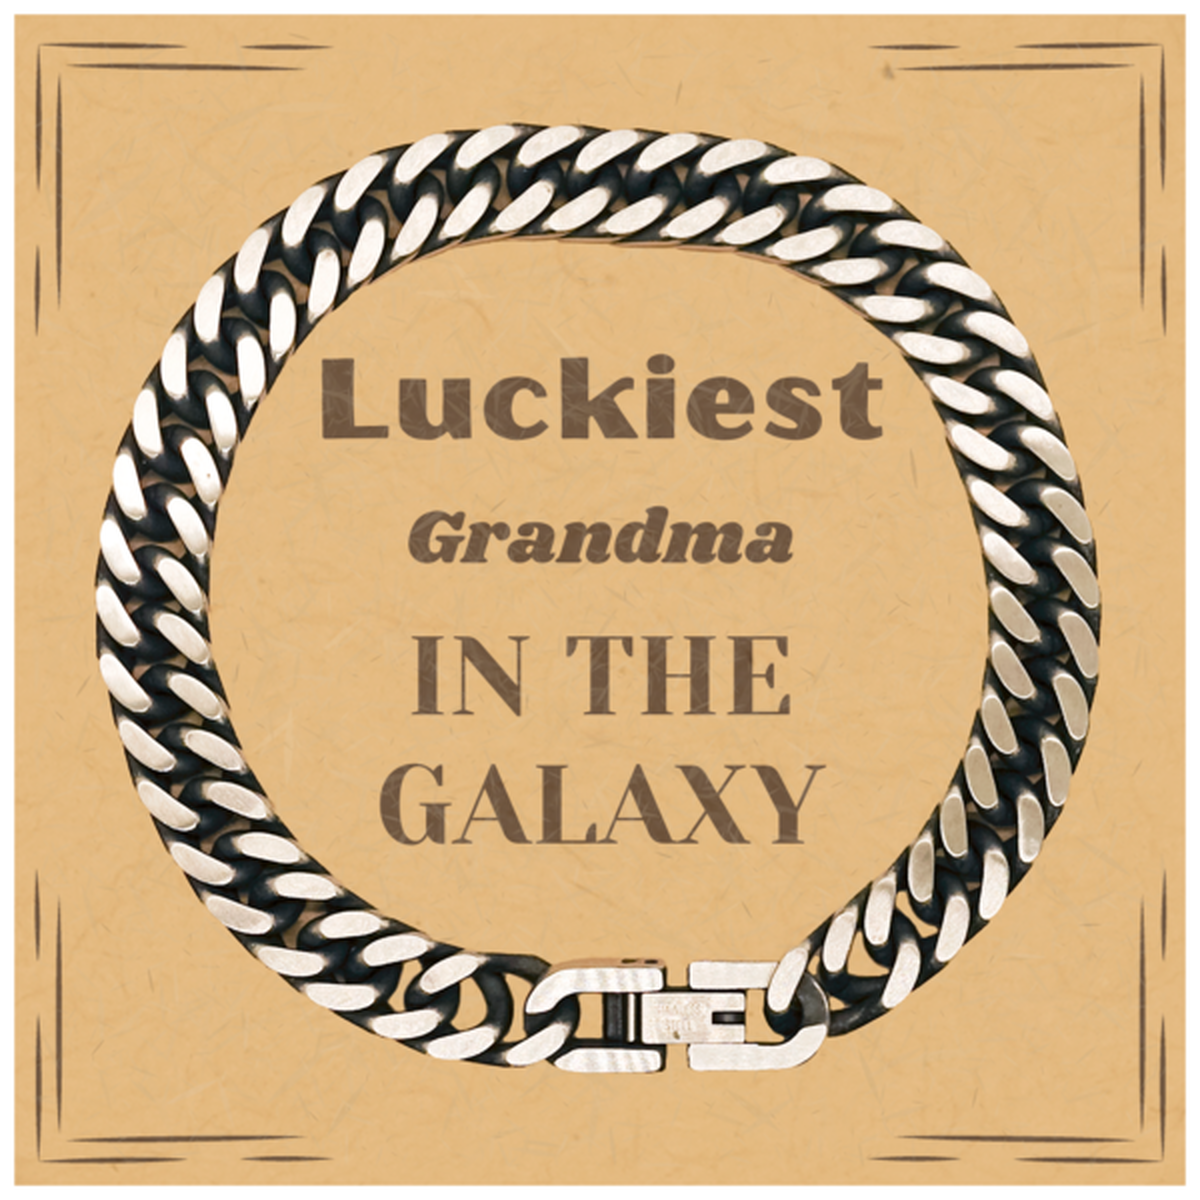 Luckiest Grandma in the Galaxy, To My Grandma Message Card Gifts, Christmas Grandma Cuban Link Chain Bracelet Gifts, X-mas Birthday Unique Gifts For Grandma Men Women